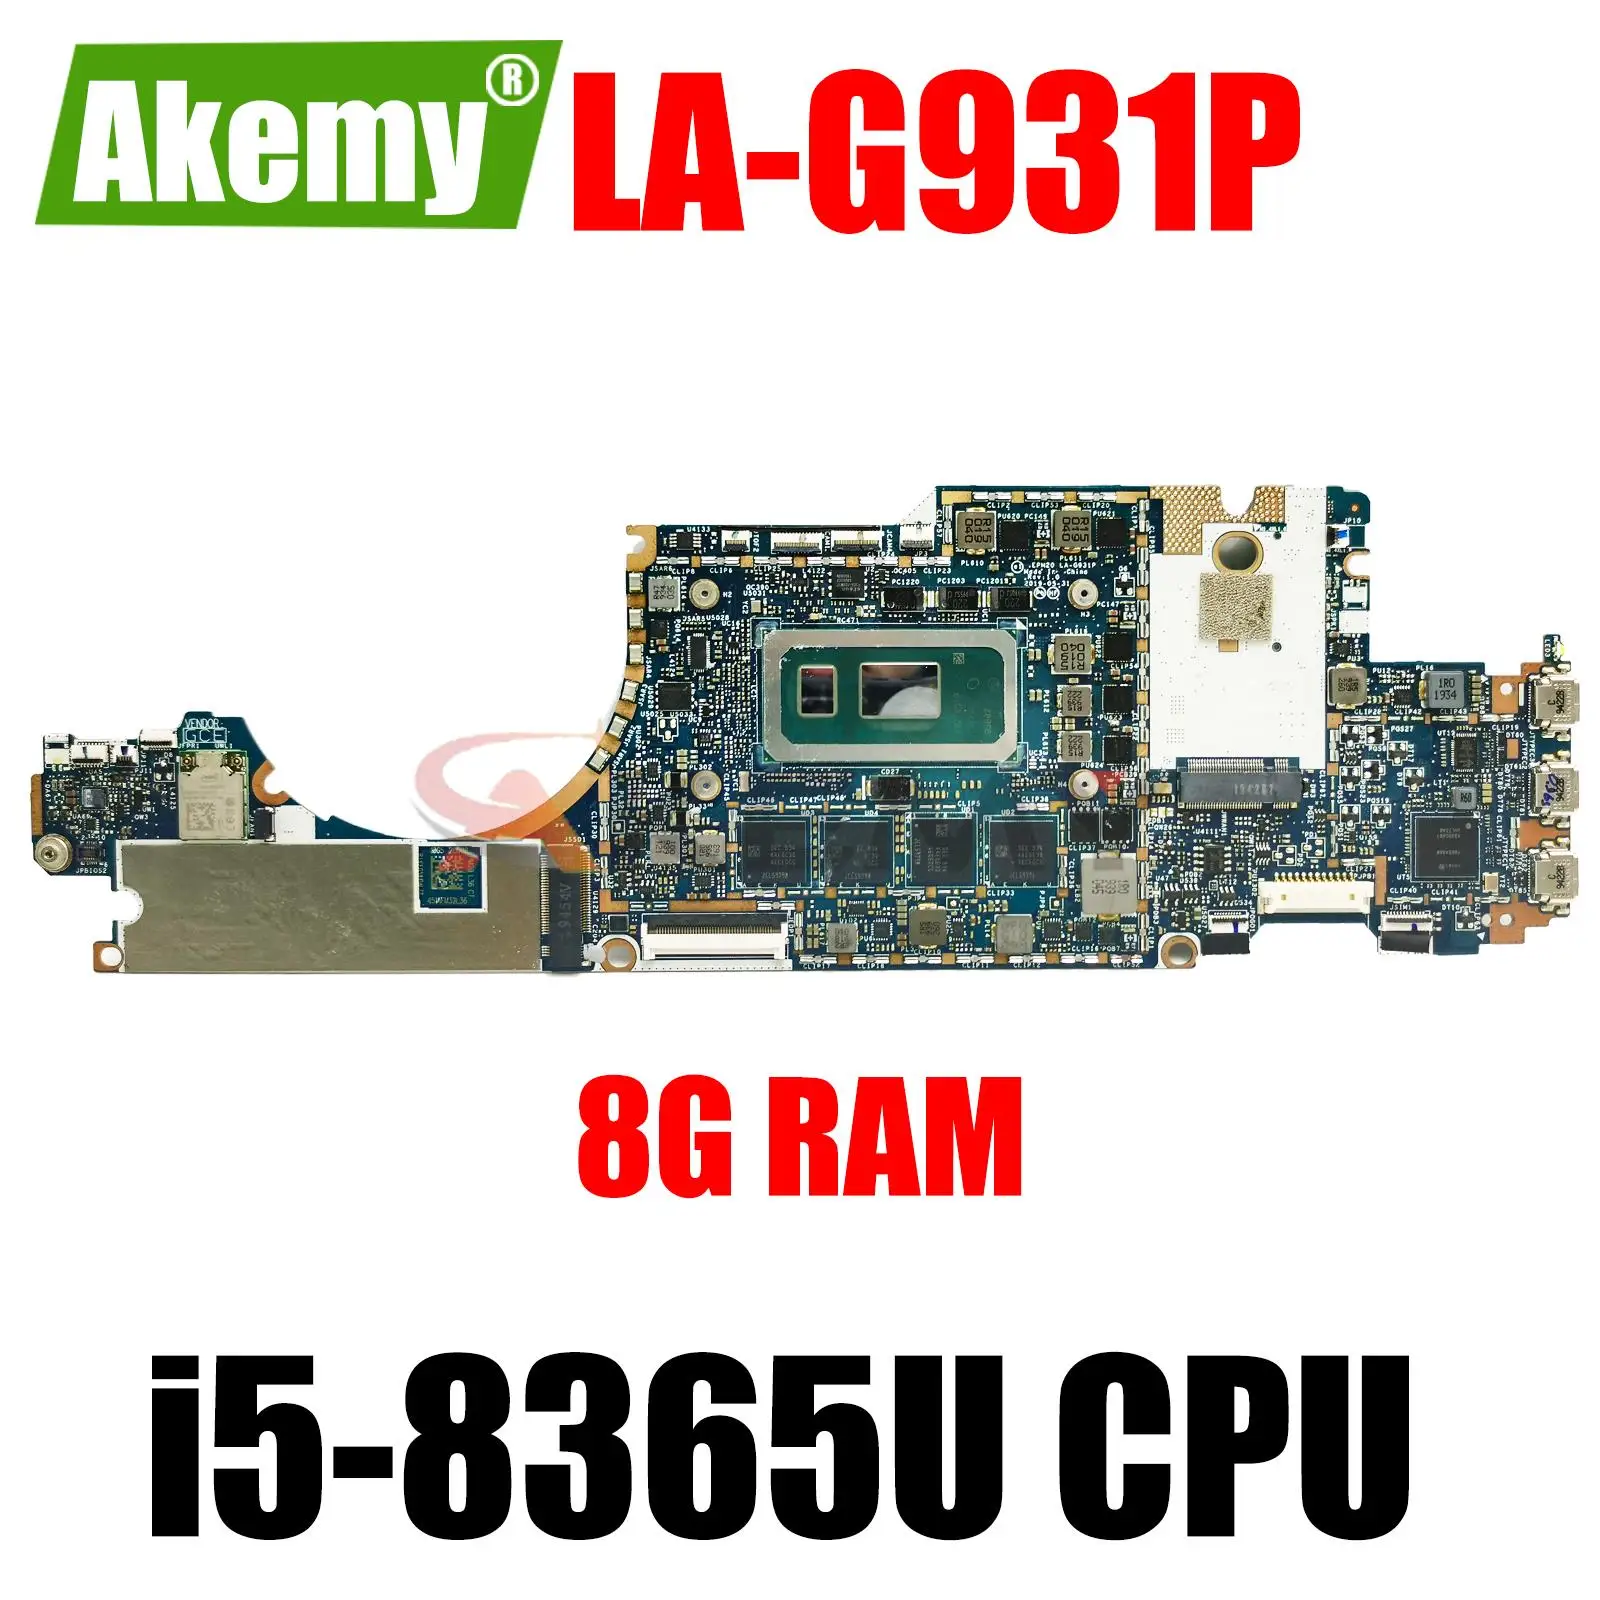 

Akemy Elite x2 G4 mainboard for HP Elite x2 G4 laptop motherboard LA-G931P WITH i5-8365U cpu 8G RAM test 100% OK